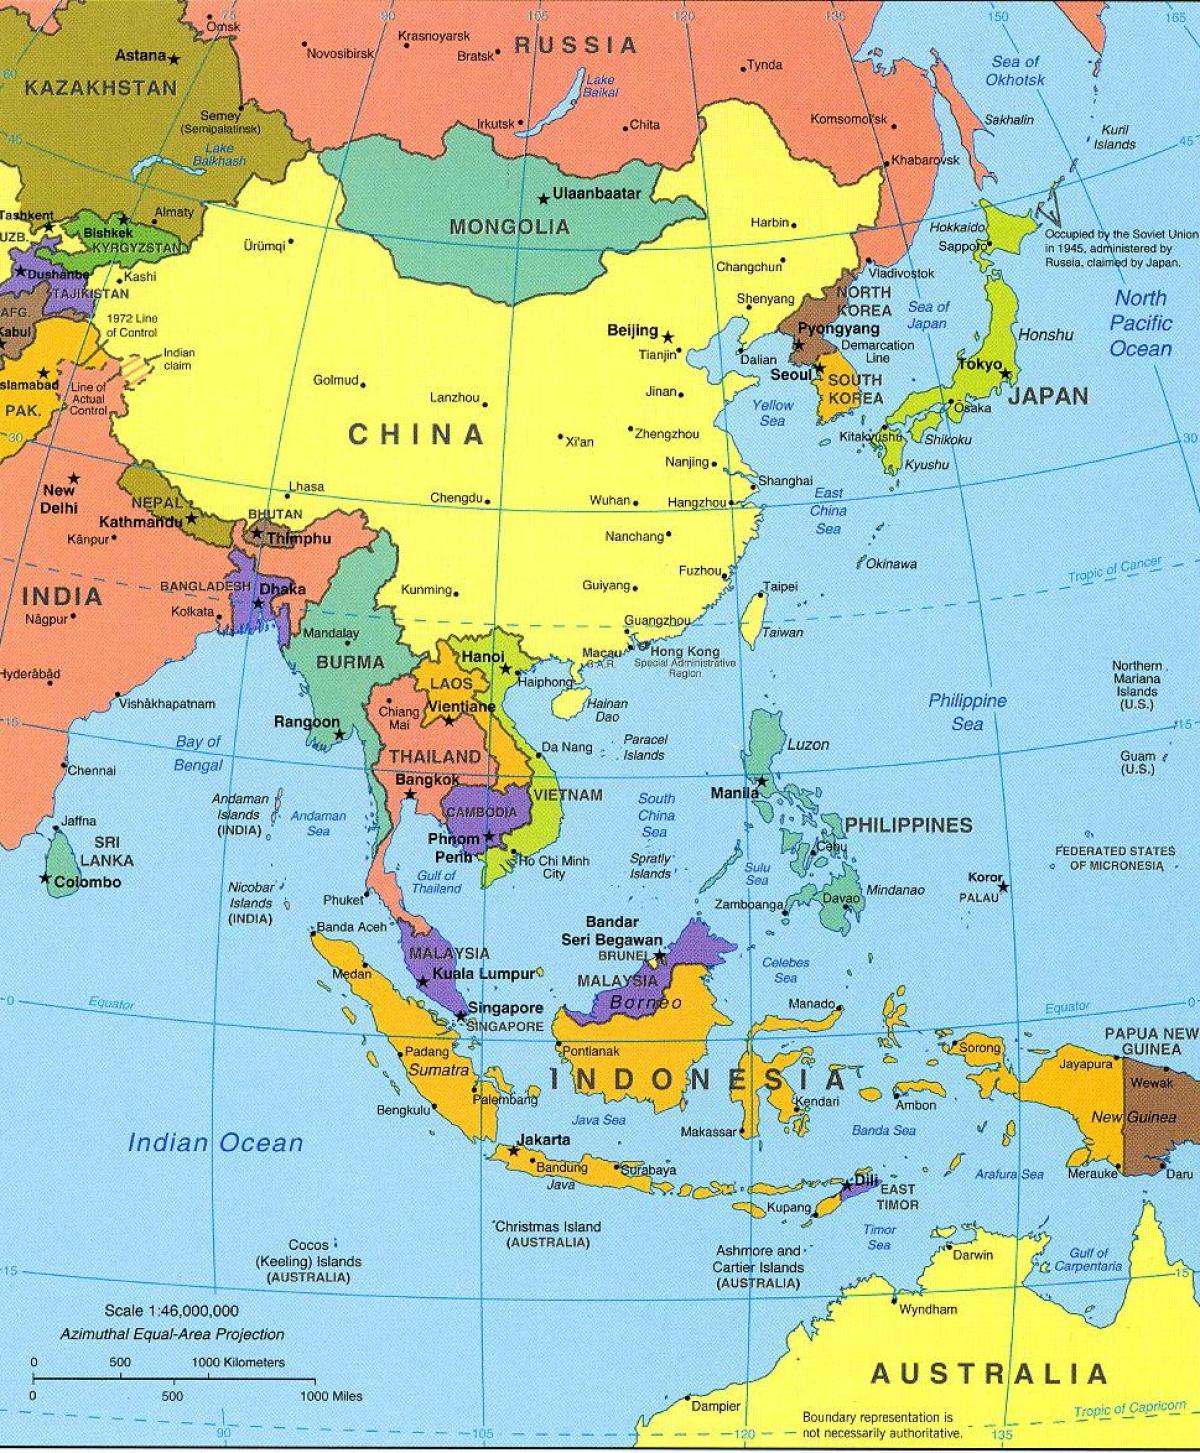 Taipei ubicació en el mapa del món